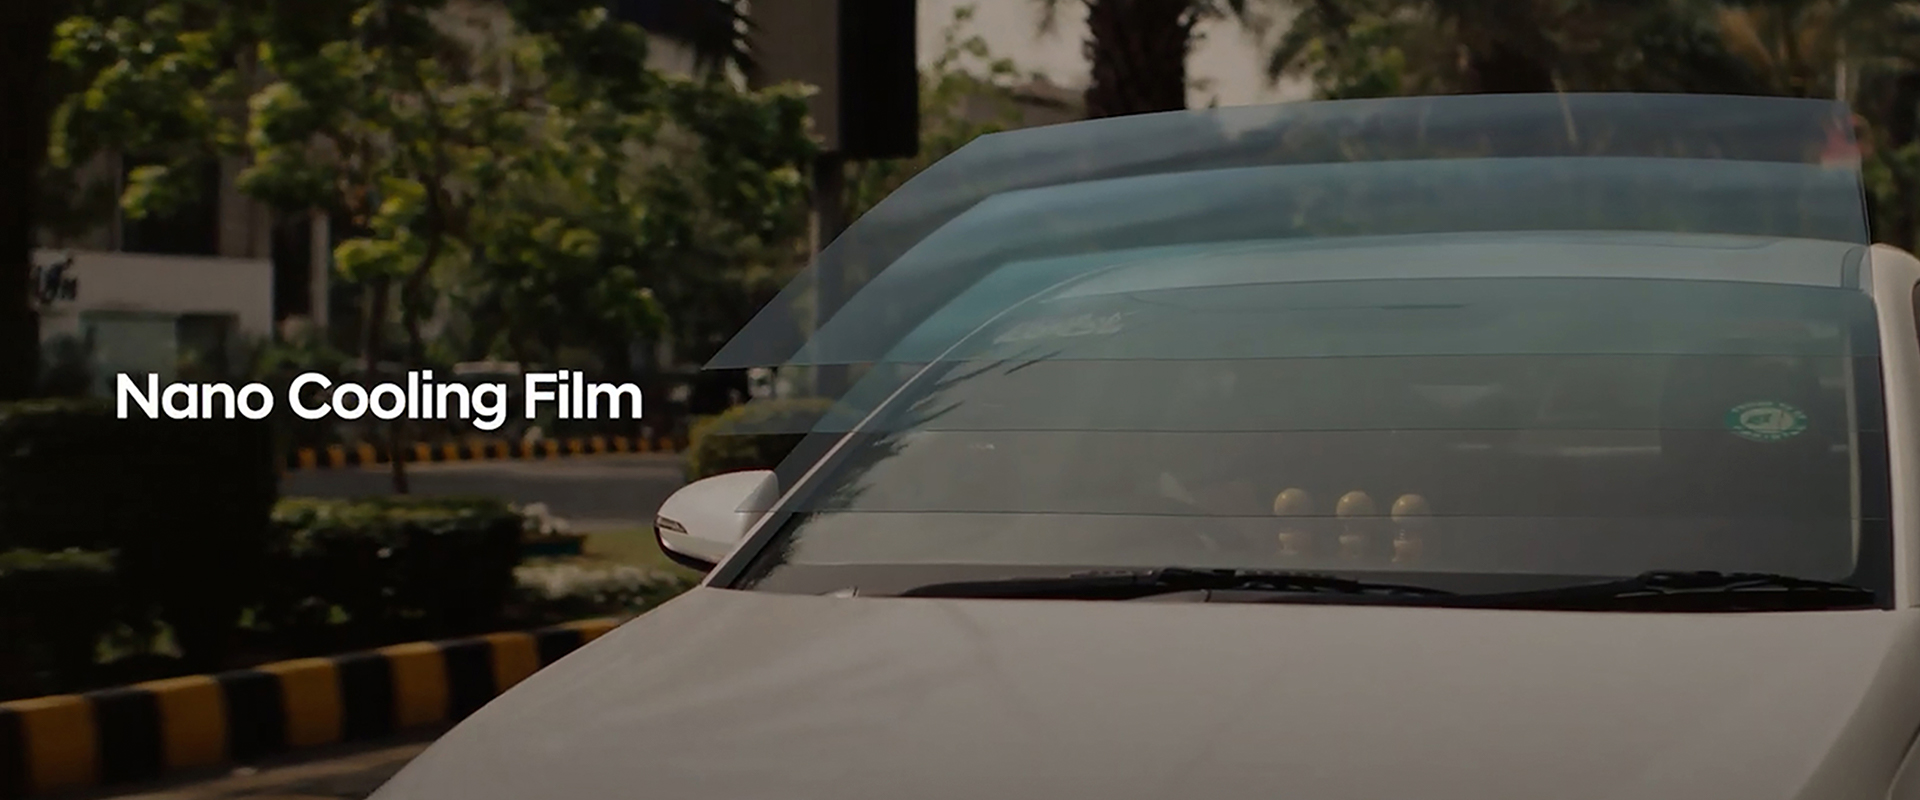 ‘Made Cooler by Hyundai’ Campaign Video Highlights Hyundai Motor’s Pioneering Nano Cooling Film